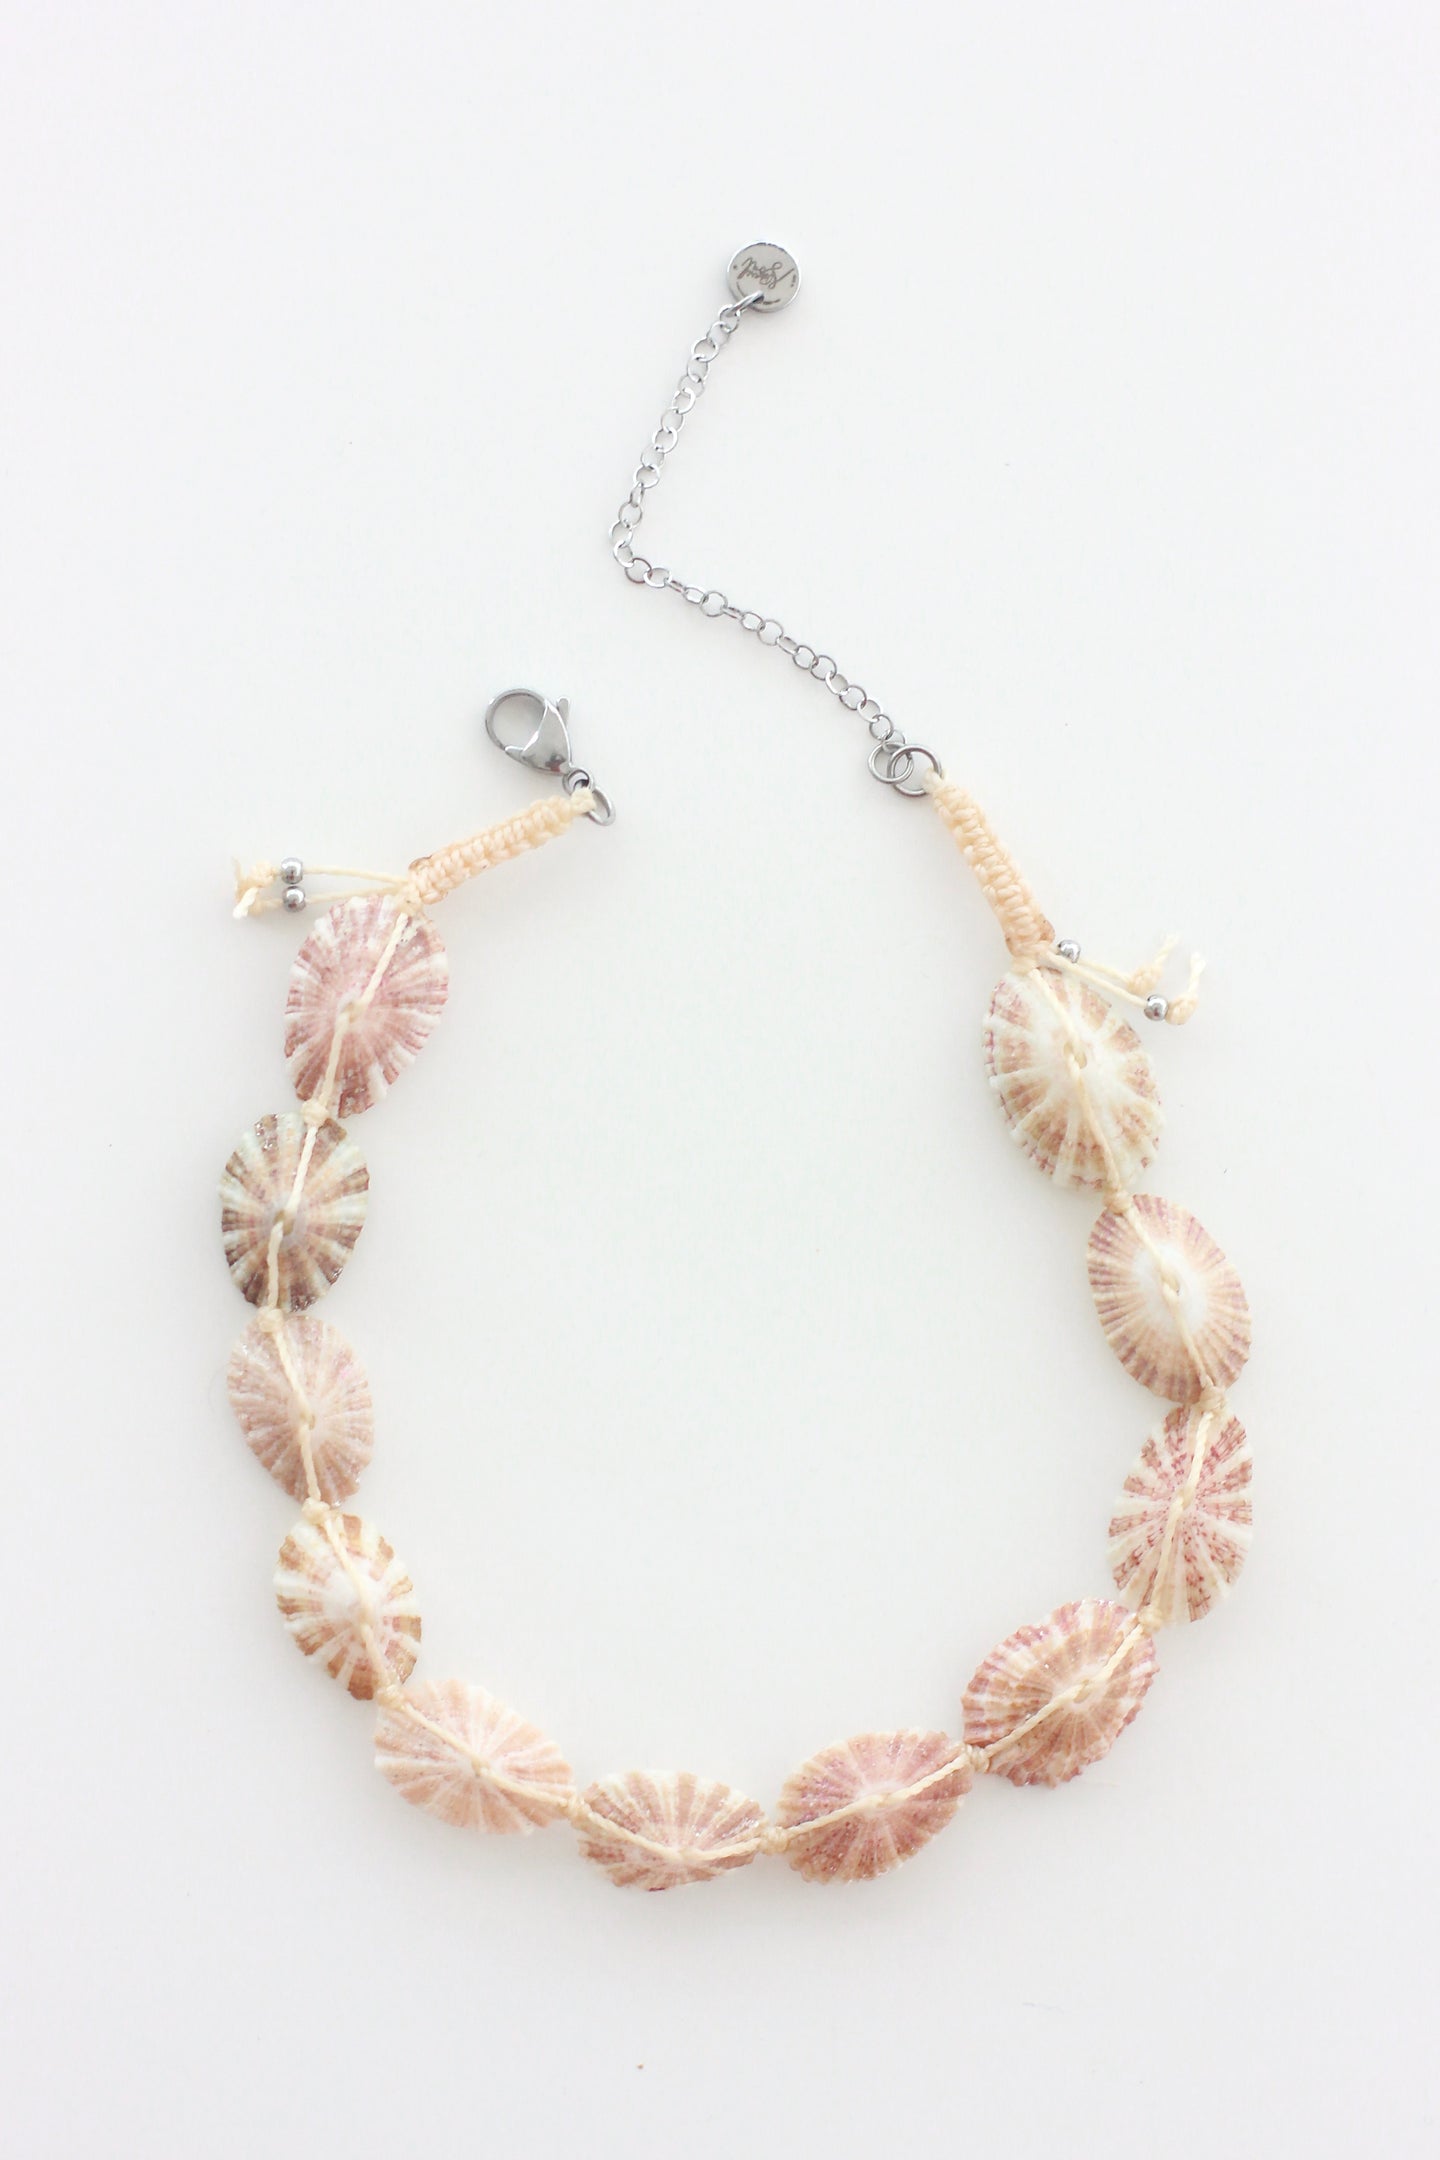 Limpet Shells Necklace